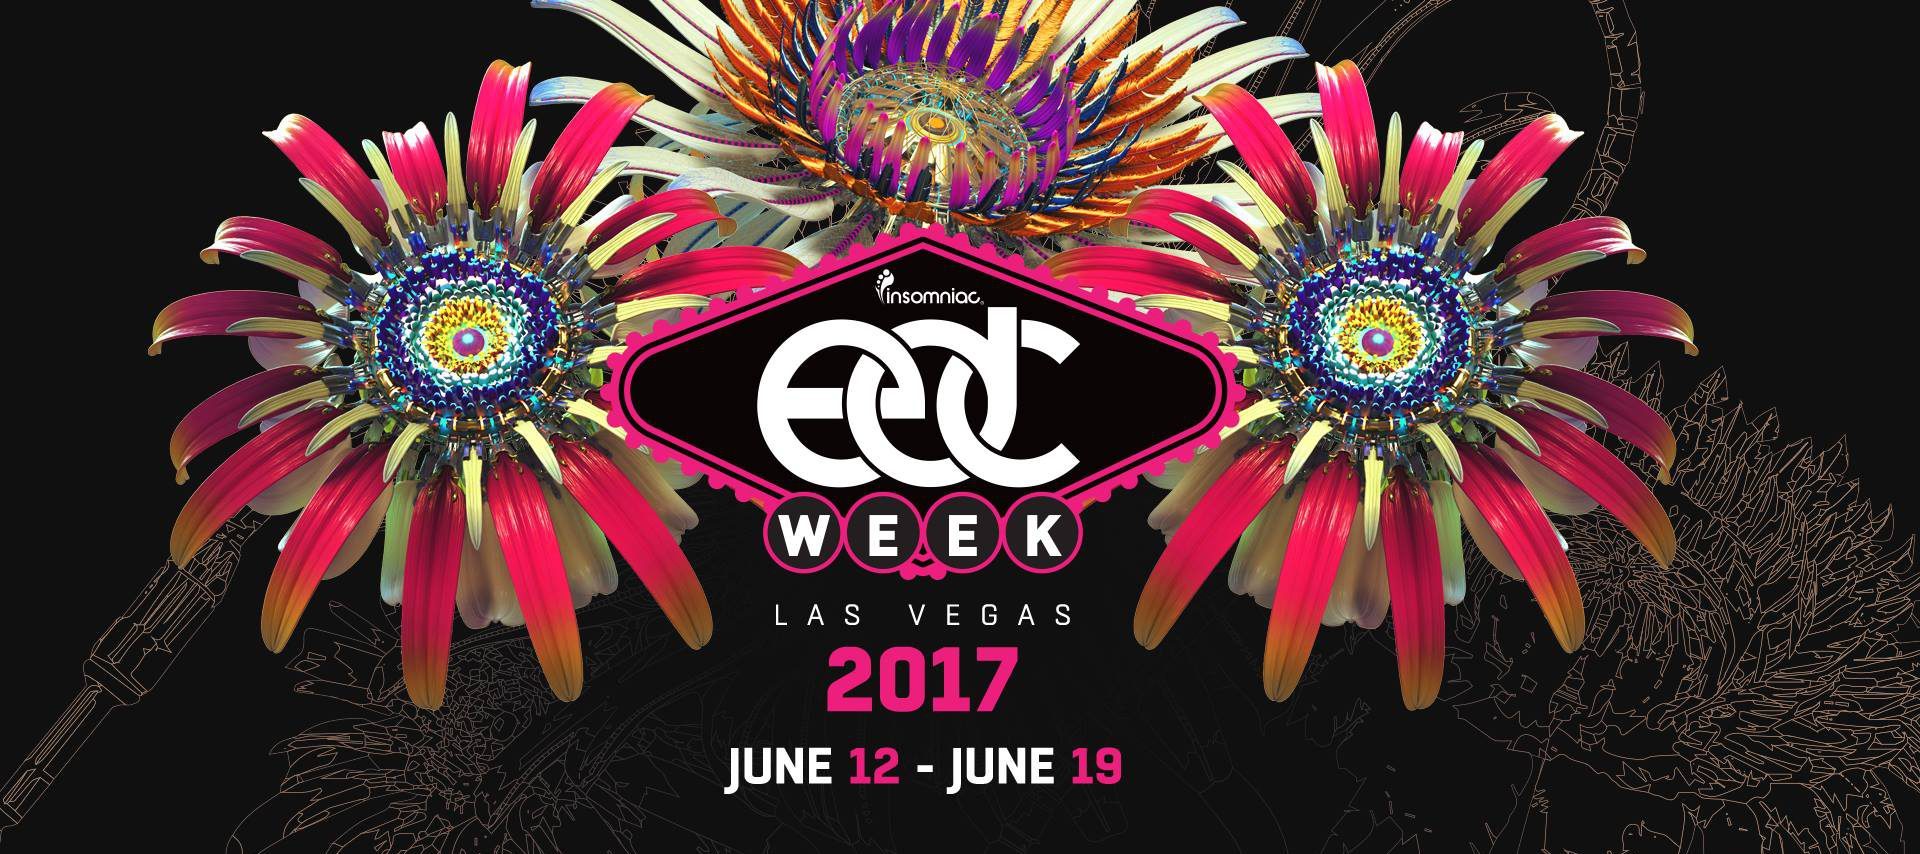 EDC week 2017